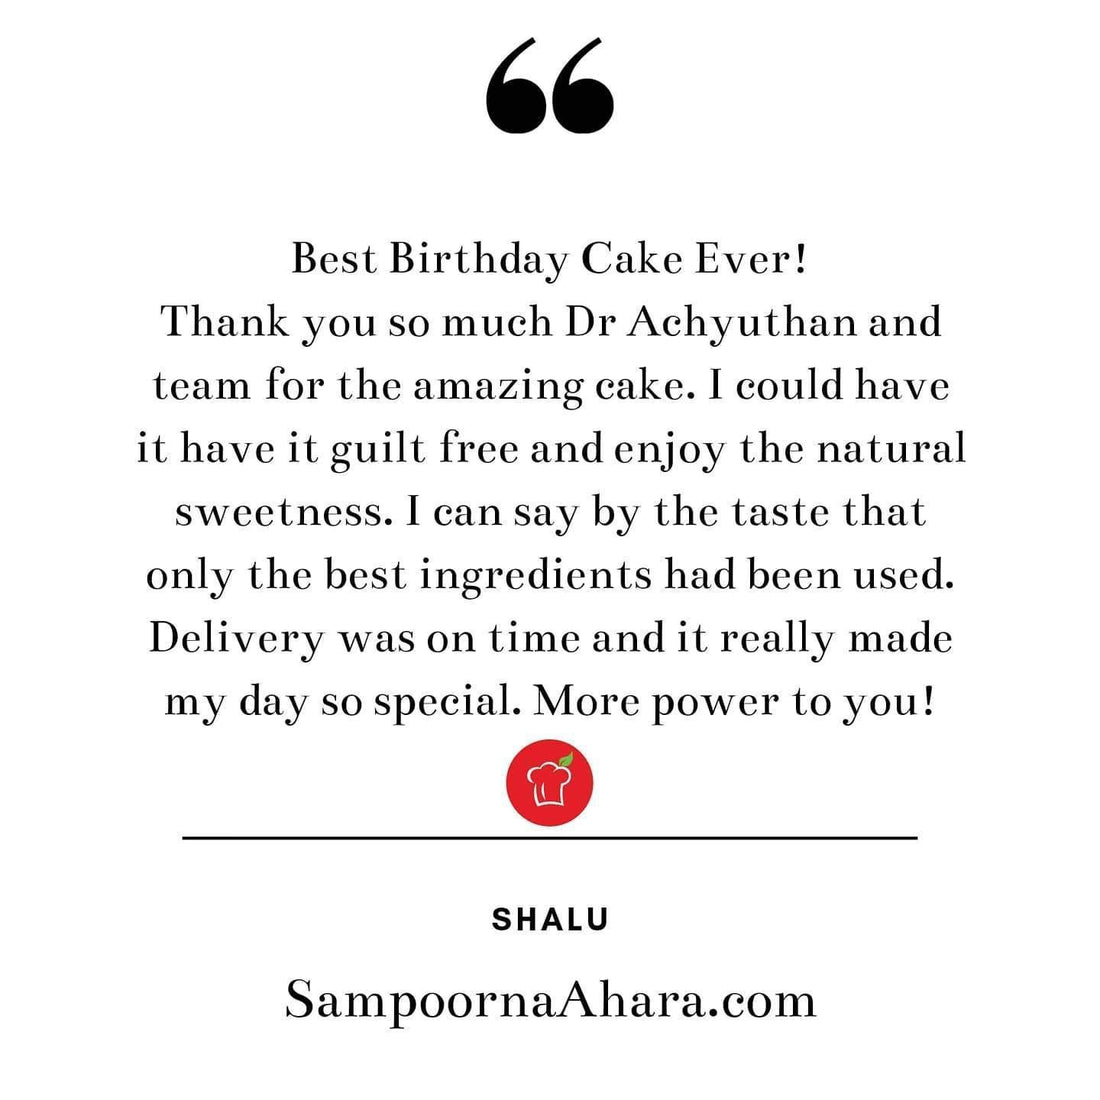 Best Birthday Cake Ever! | Sampoorna Ahara - Healthy Food, Tasty Food